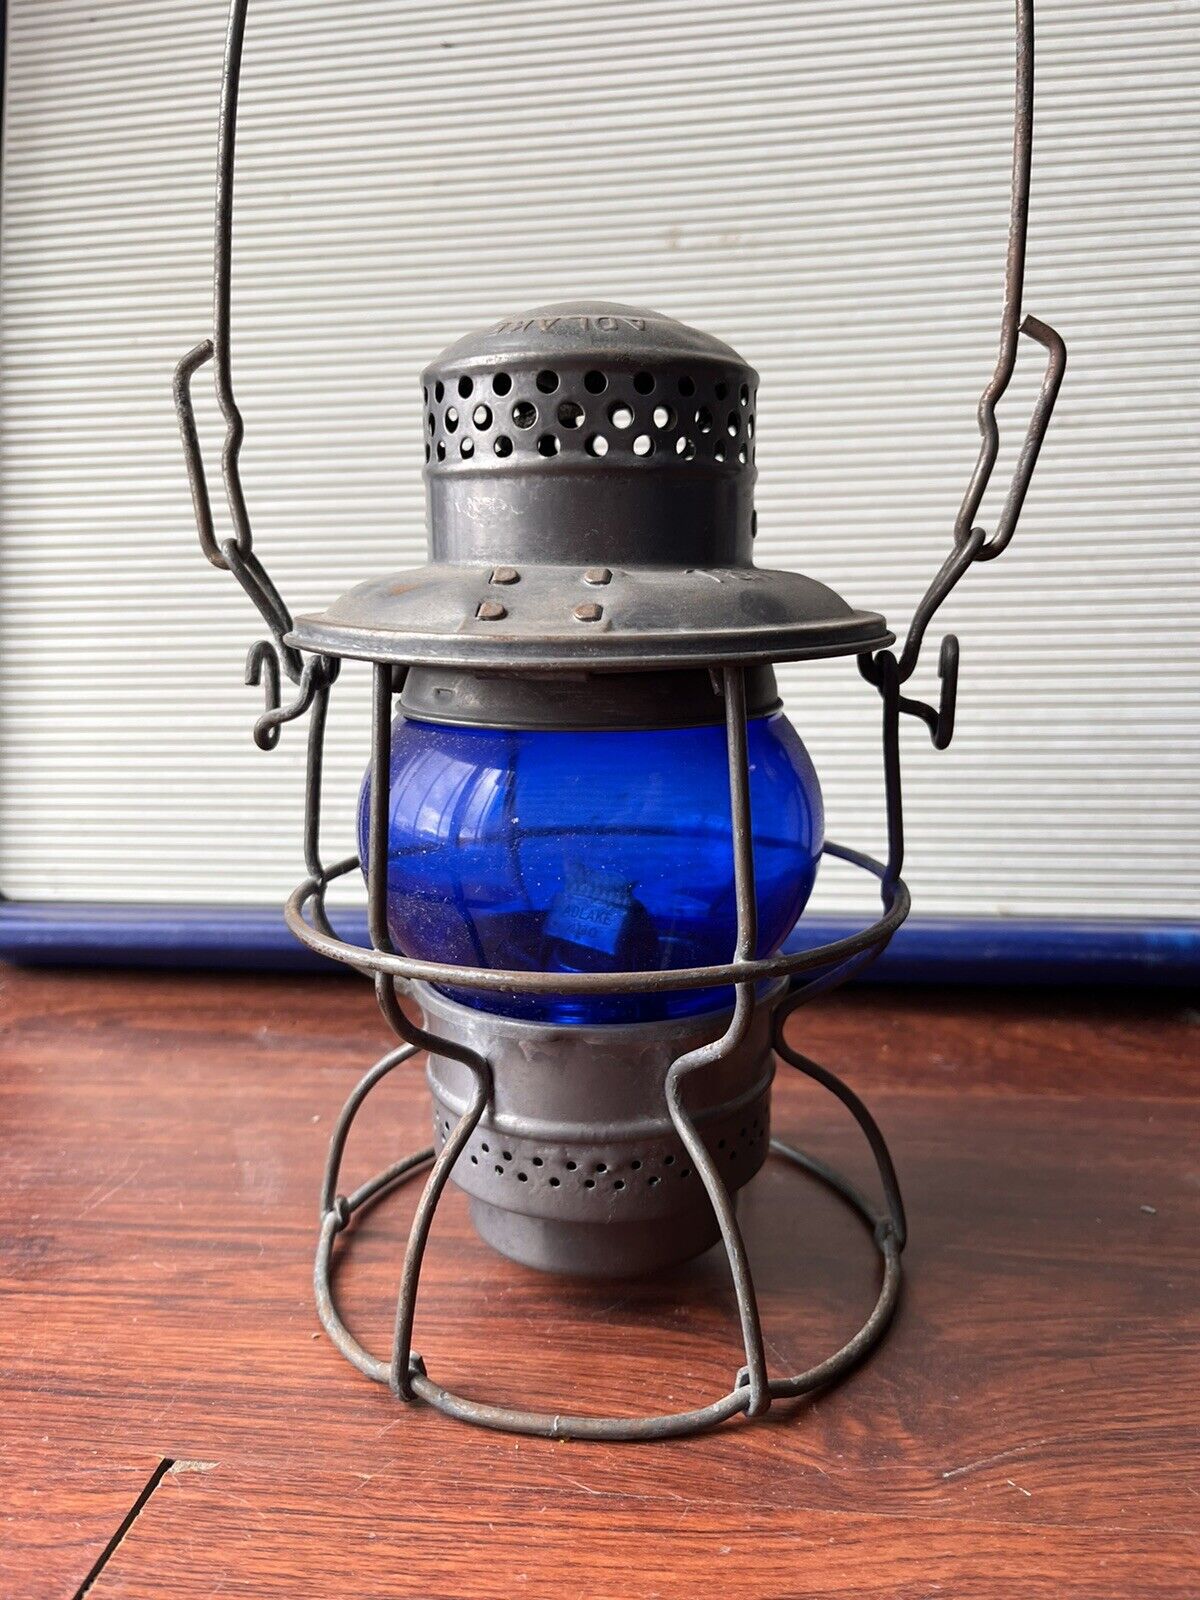 Texas & Pacific Railroad Lantern w/ Blue Globe, ADLAKE Kero